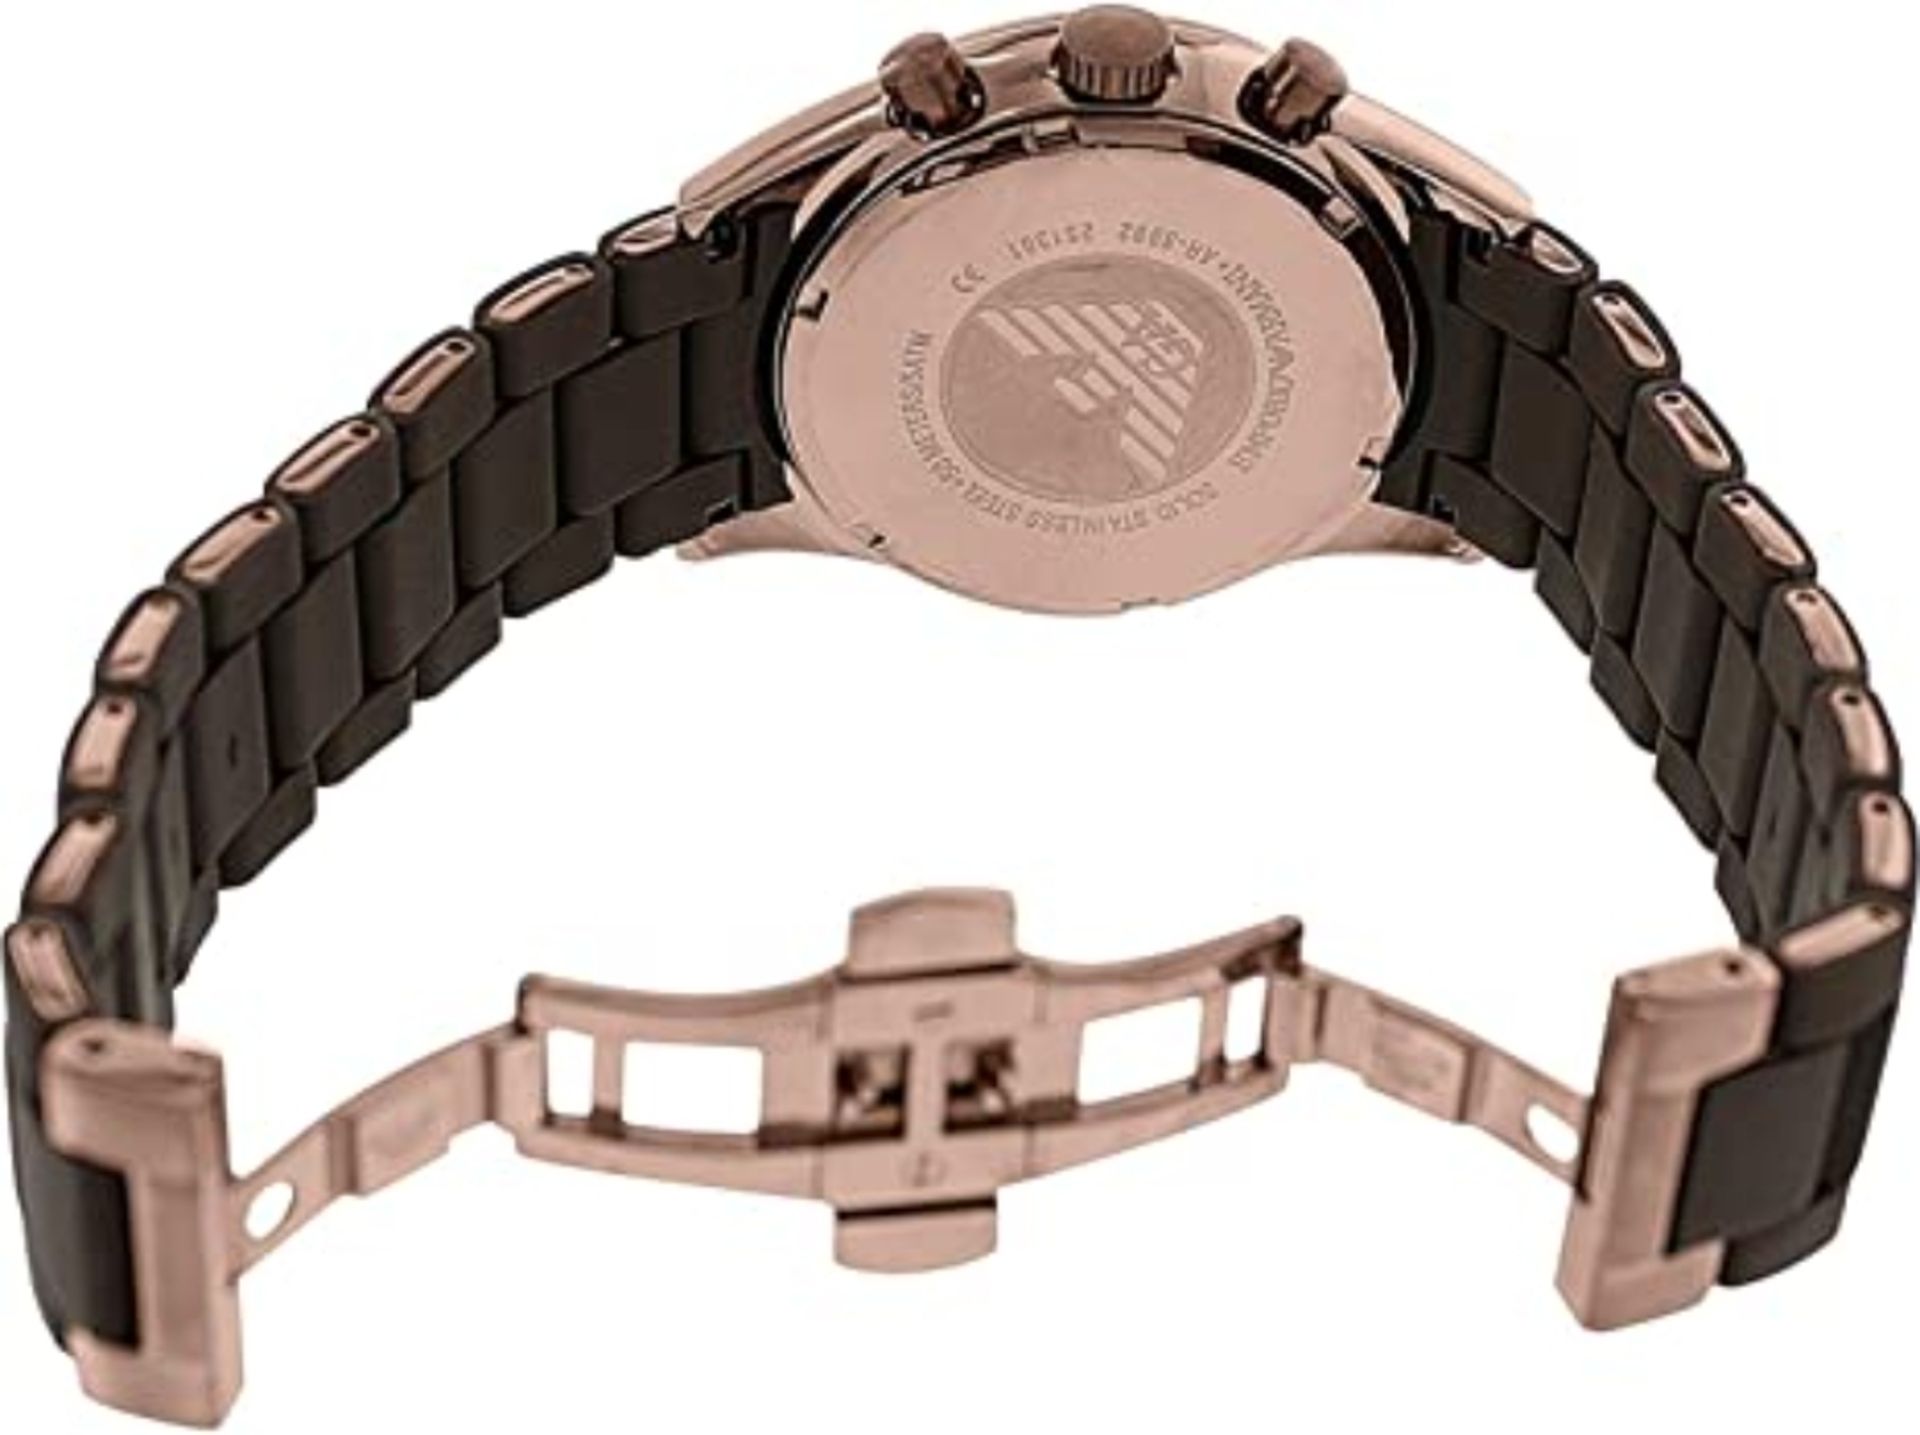 Emporio Armani AR5982 Men's Sportivo Brown Dial Quartz Chronograph Watch - Image 6 of 7